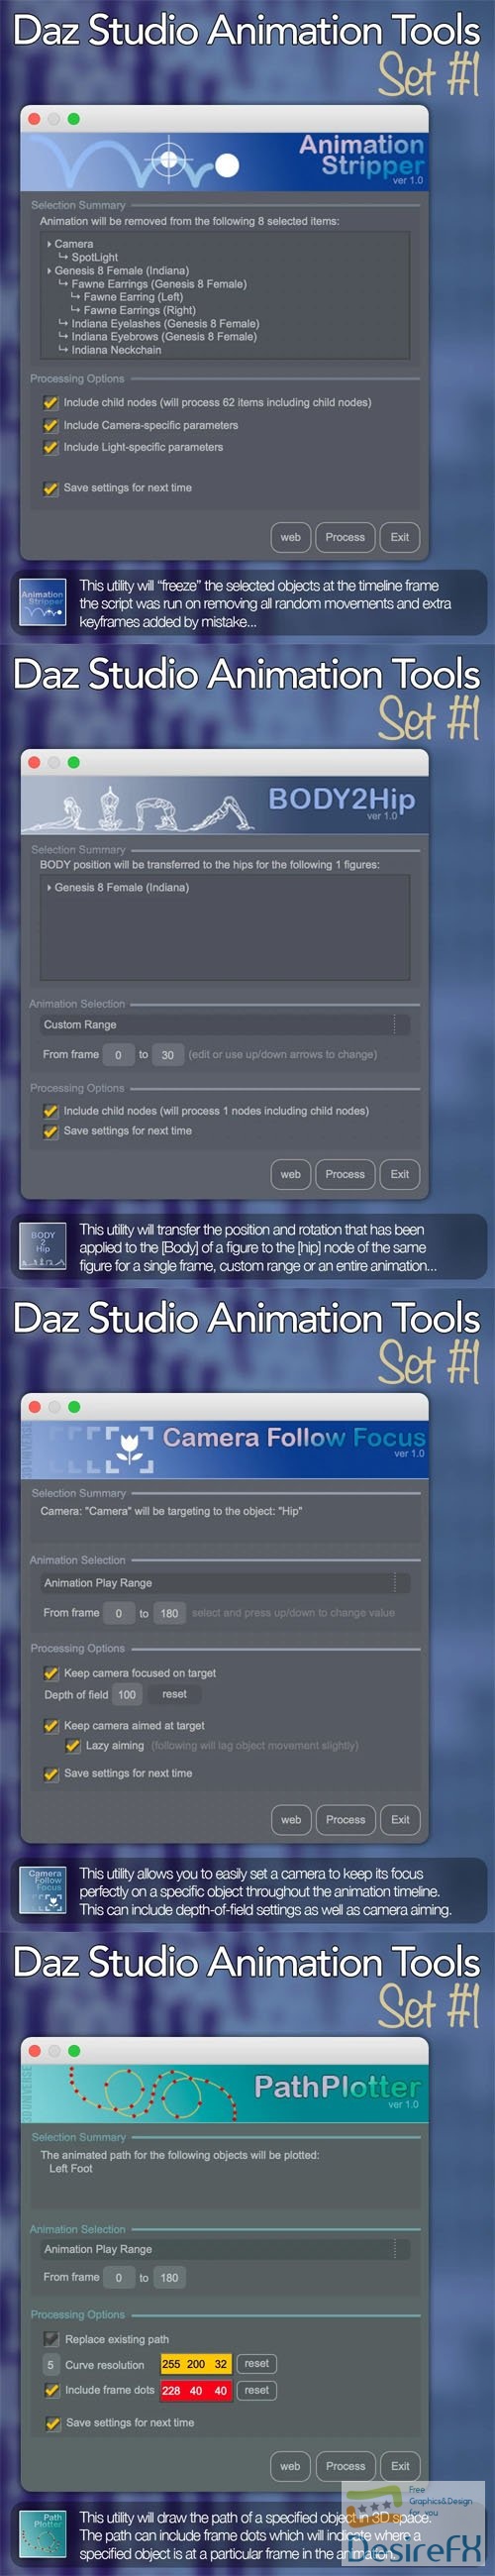 4 Animation Tools for Daz Studio 4.20 - Set 1